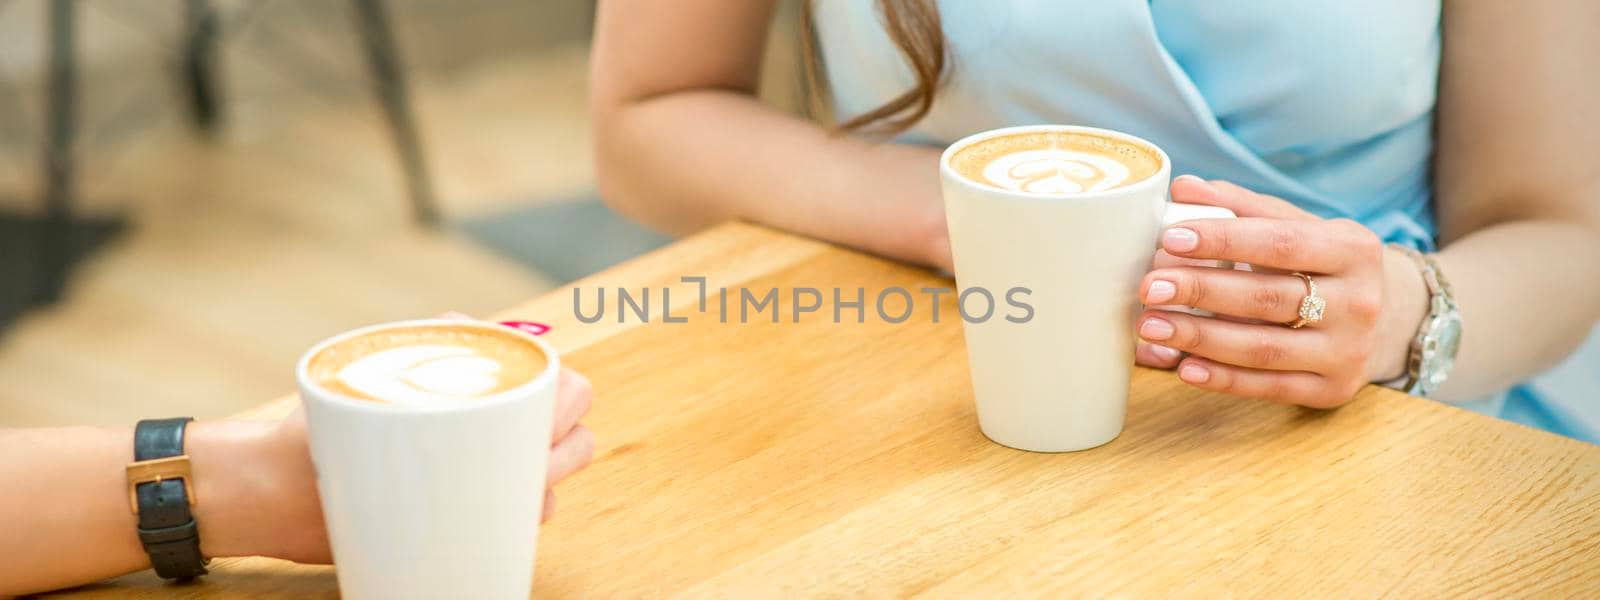 Female hands with cups of coffee by okskukuruza